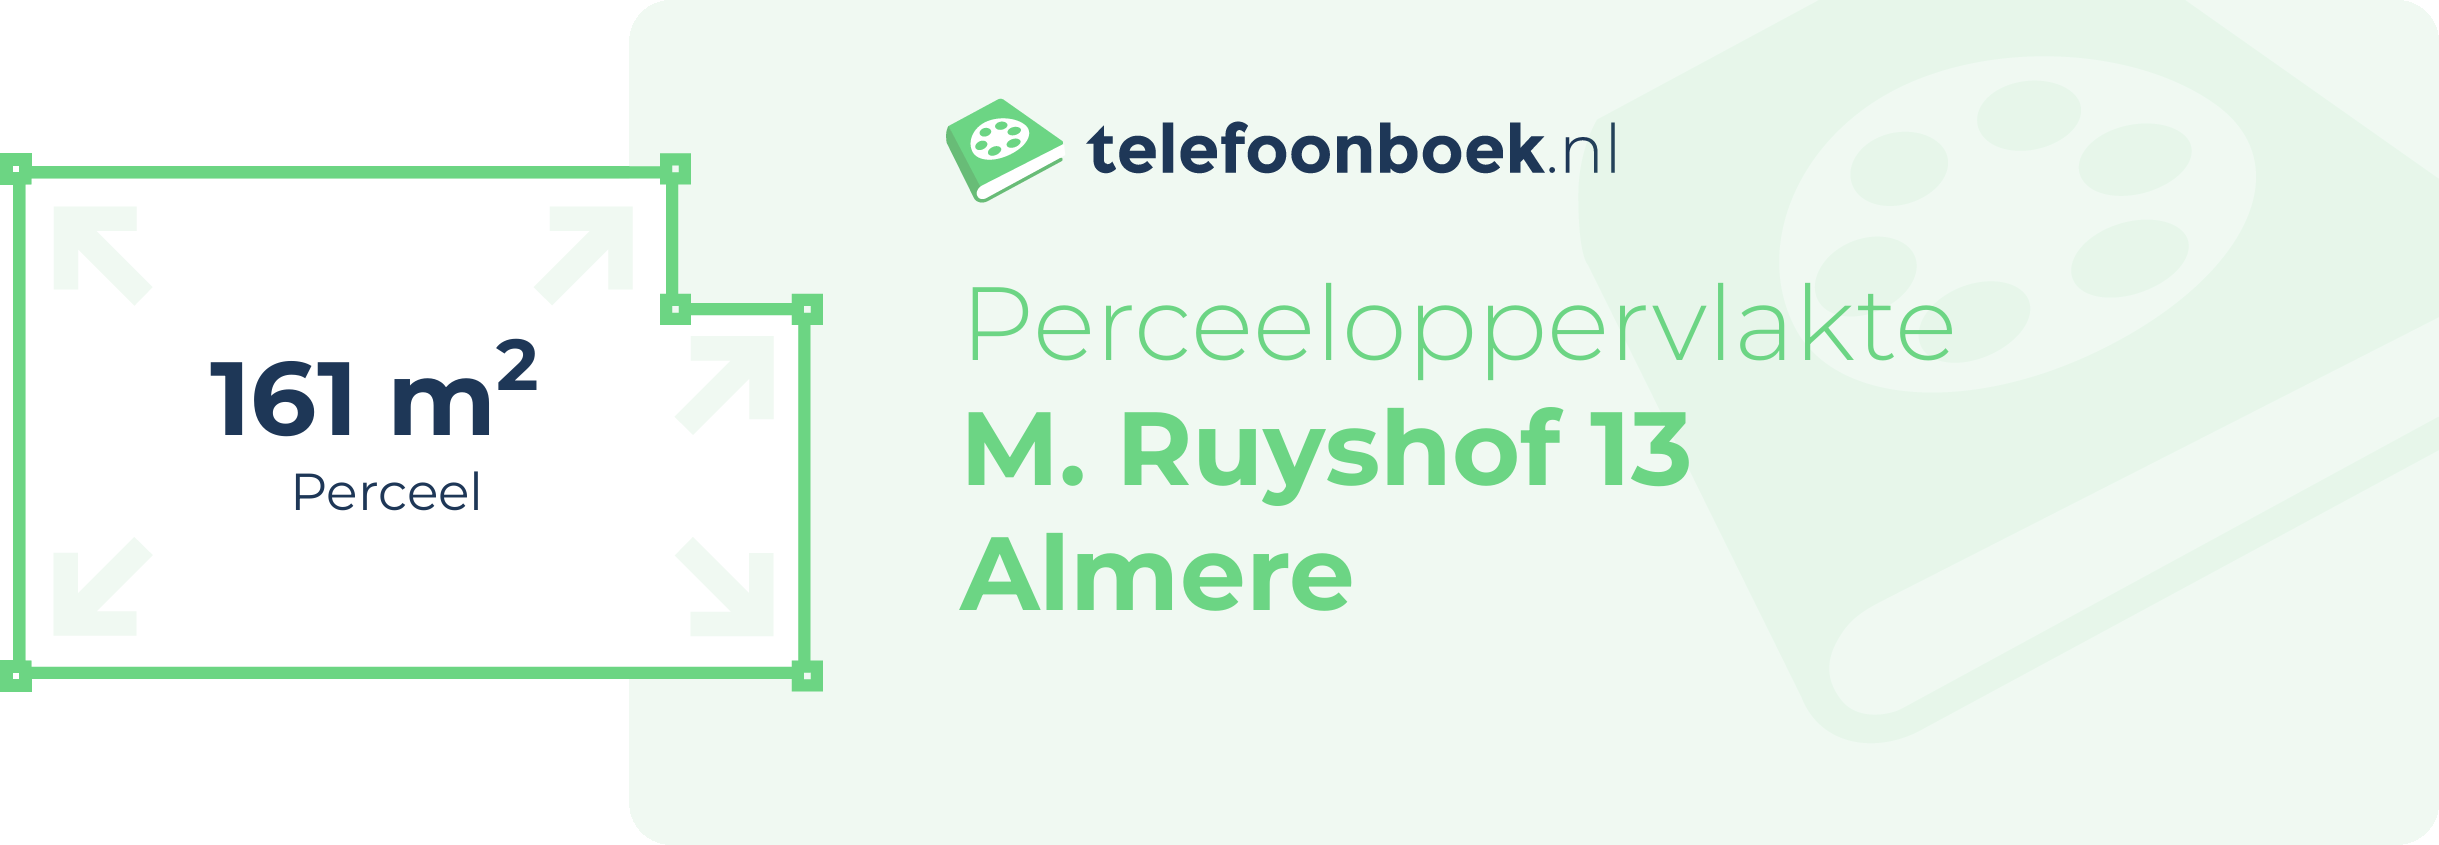 Perceeloppervlakte M. Ruyshof 13 Almere